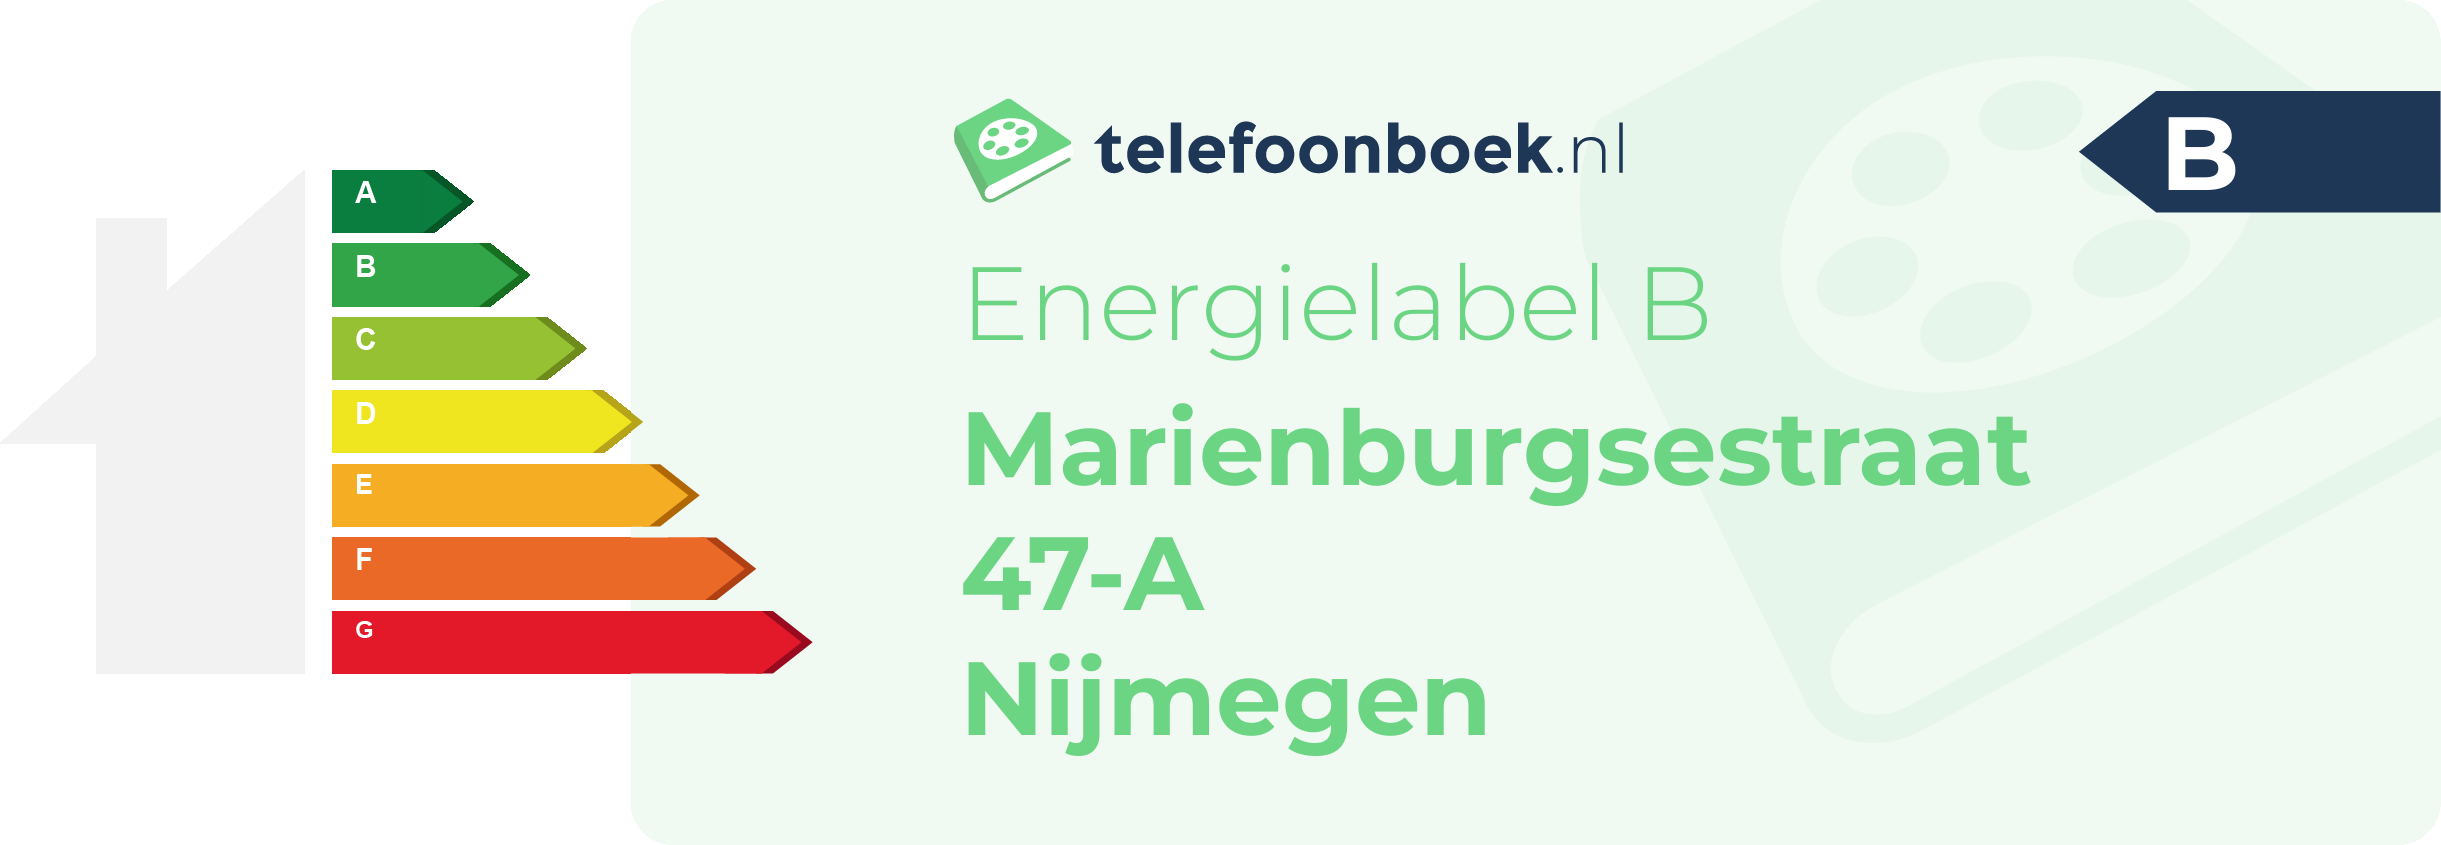 Energielabel Marienburgsestraat 47-A Nijmegen